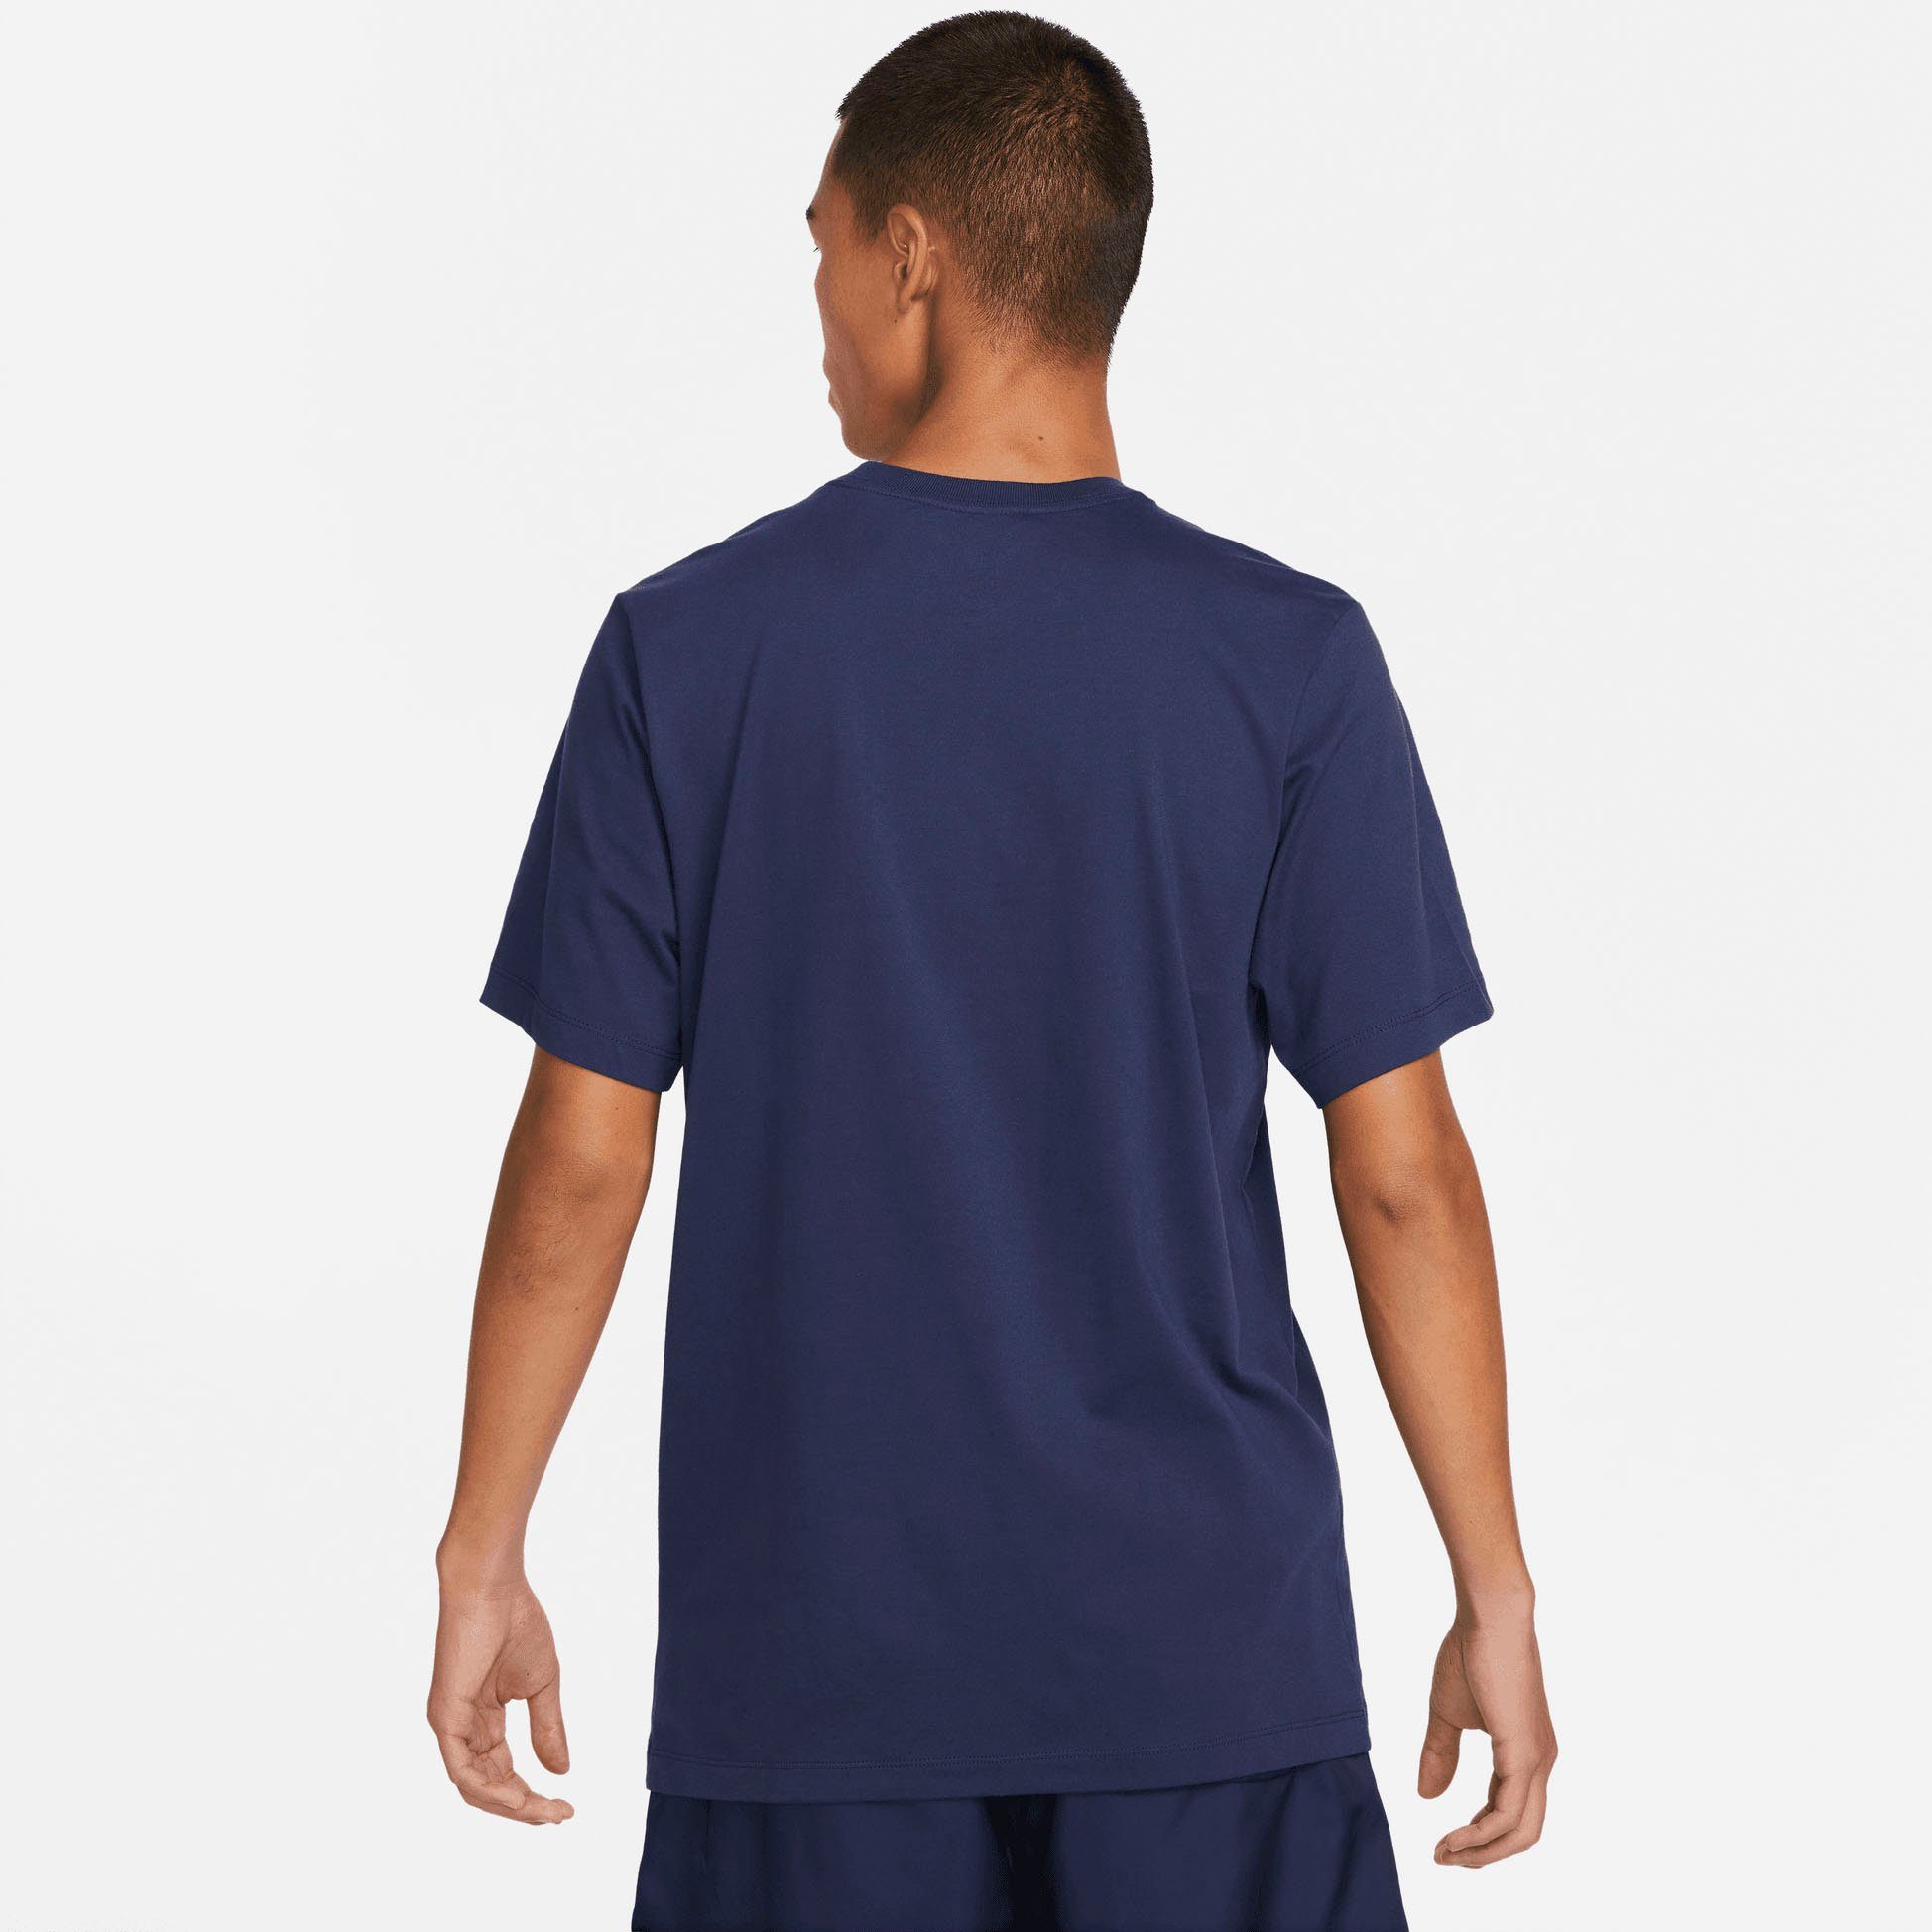 NAVY Nike T-Shirt T-Shirt Men's MIDNIGHT Sportswear